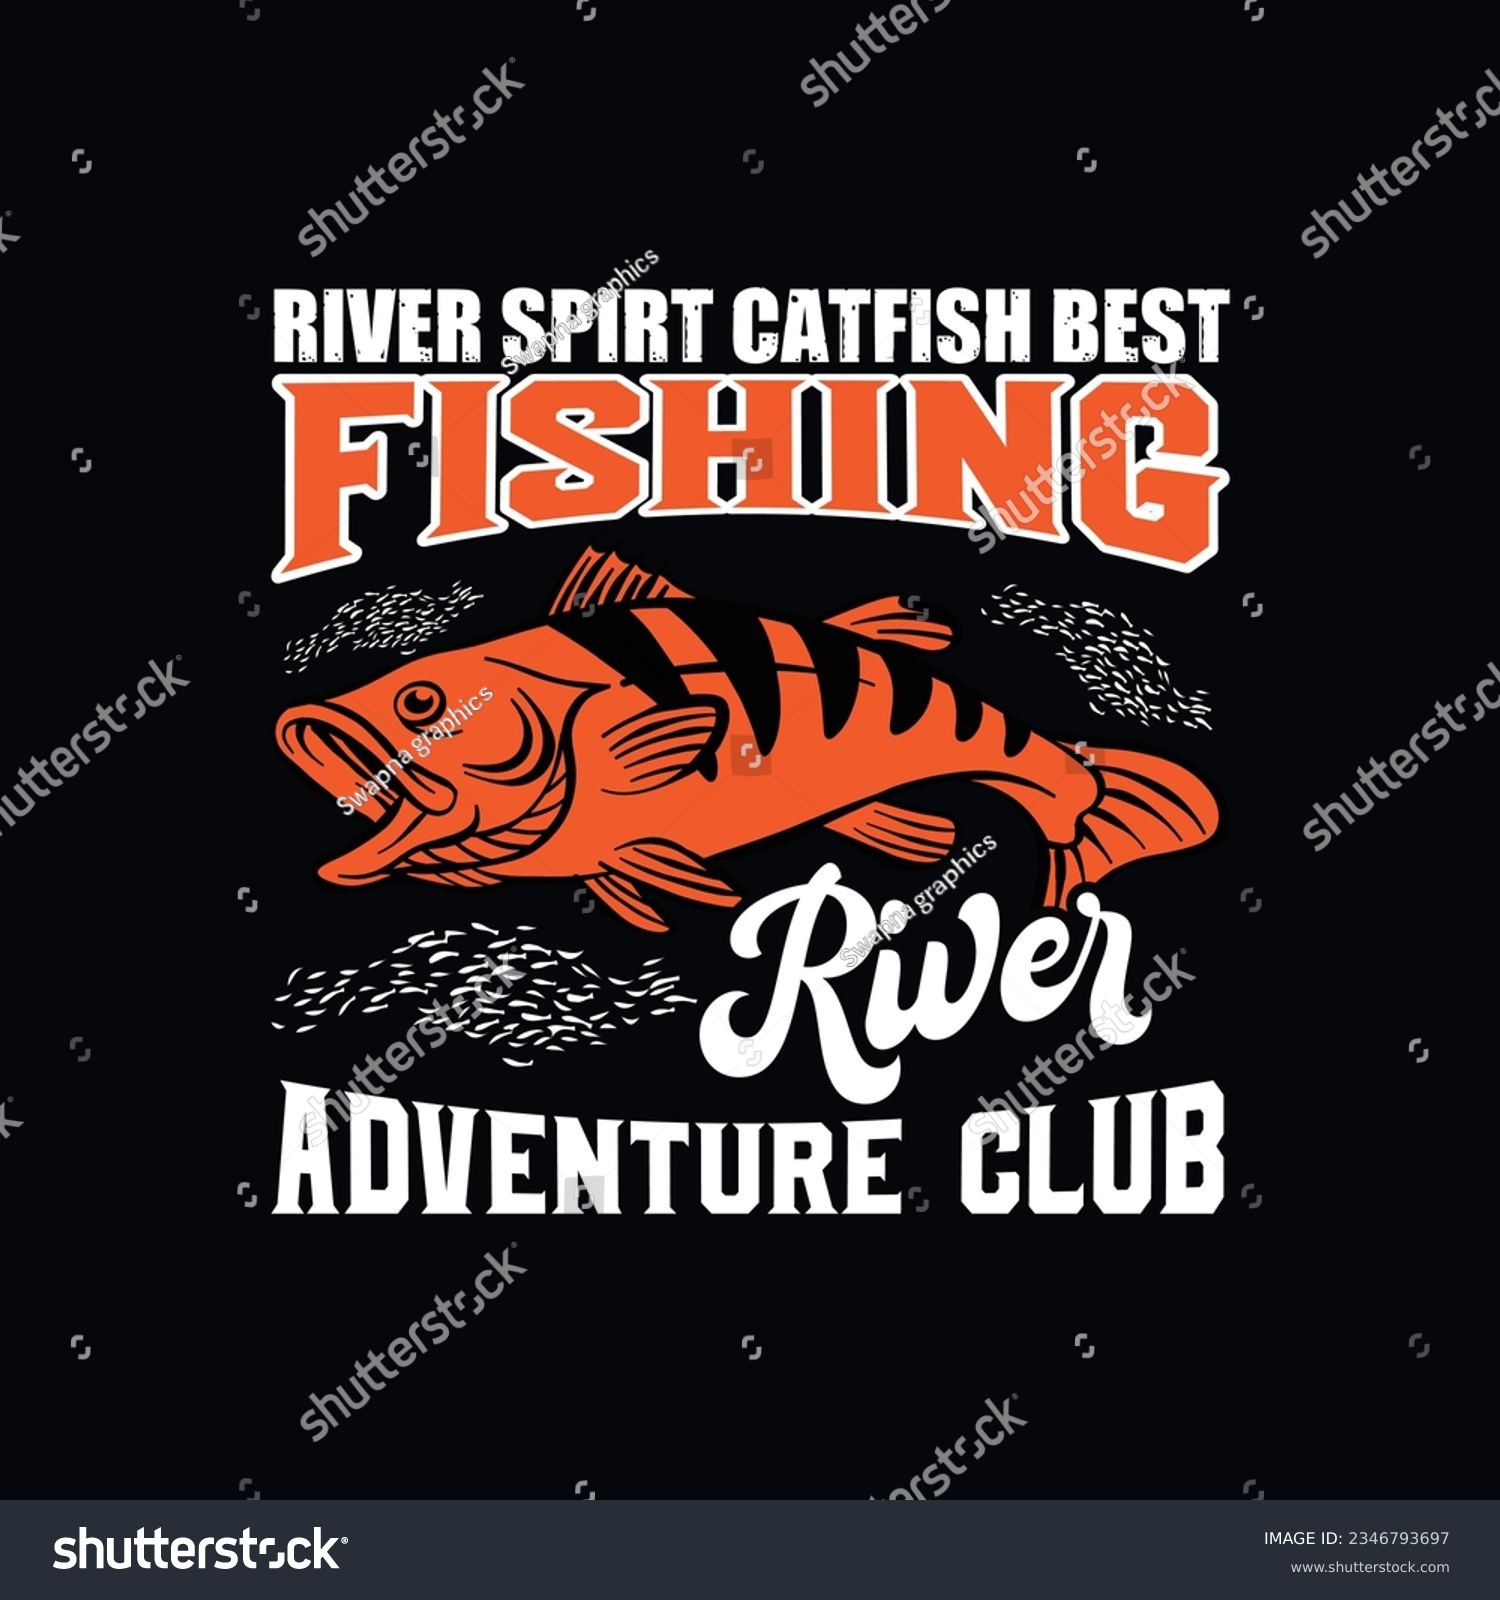 SVG of RIVER SPIRT CATFISH BEST RIVER ADVENTURE CLUB, CREATIVE FISHING T SHIRT DESIGN svg